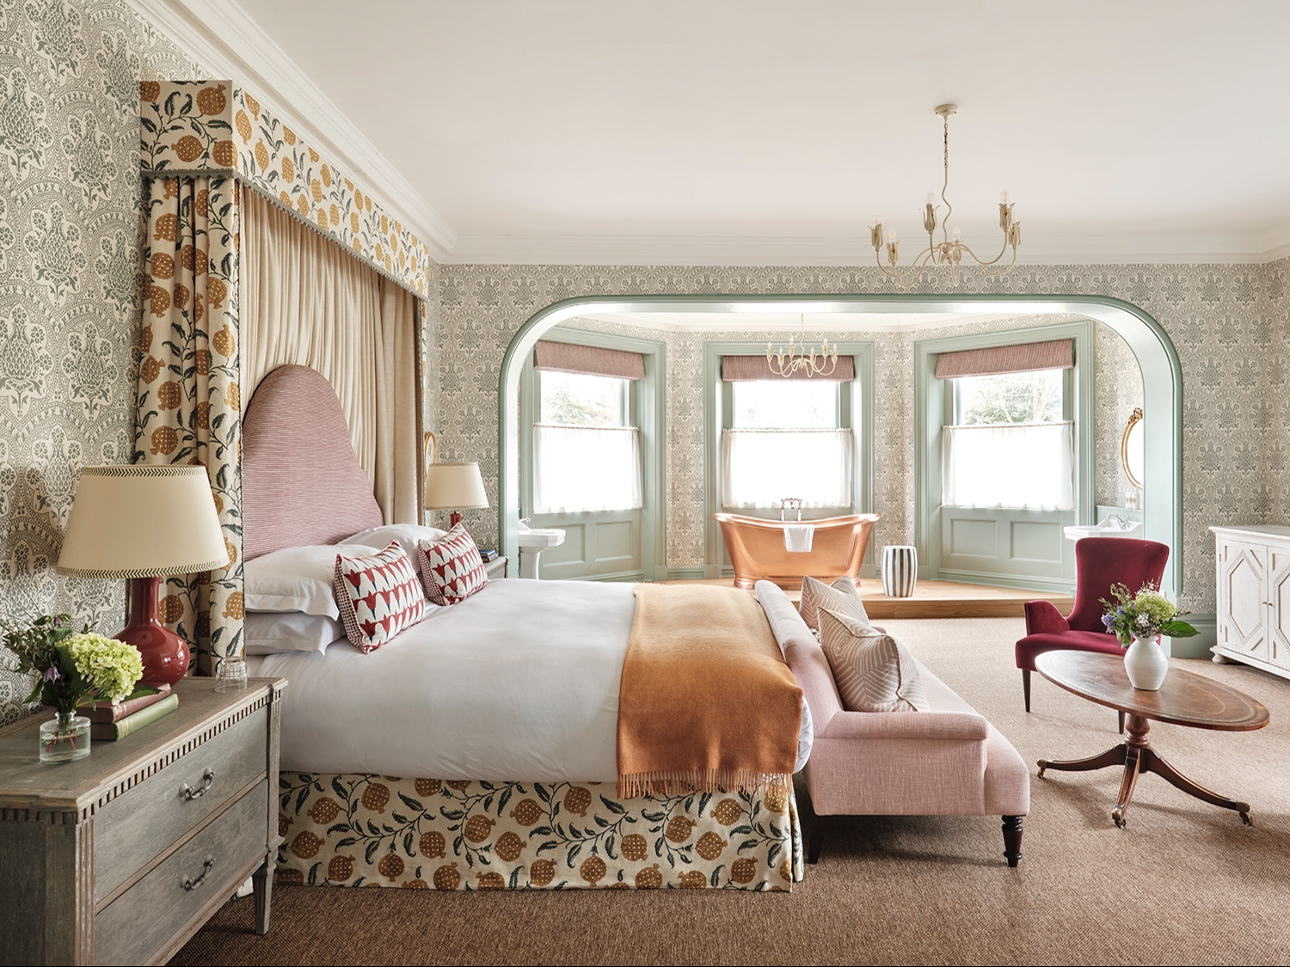 opulent bedroom suite, pastel tones, copper bath in room, sofa at end of bed